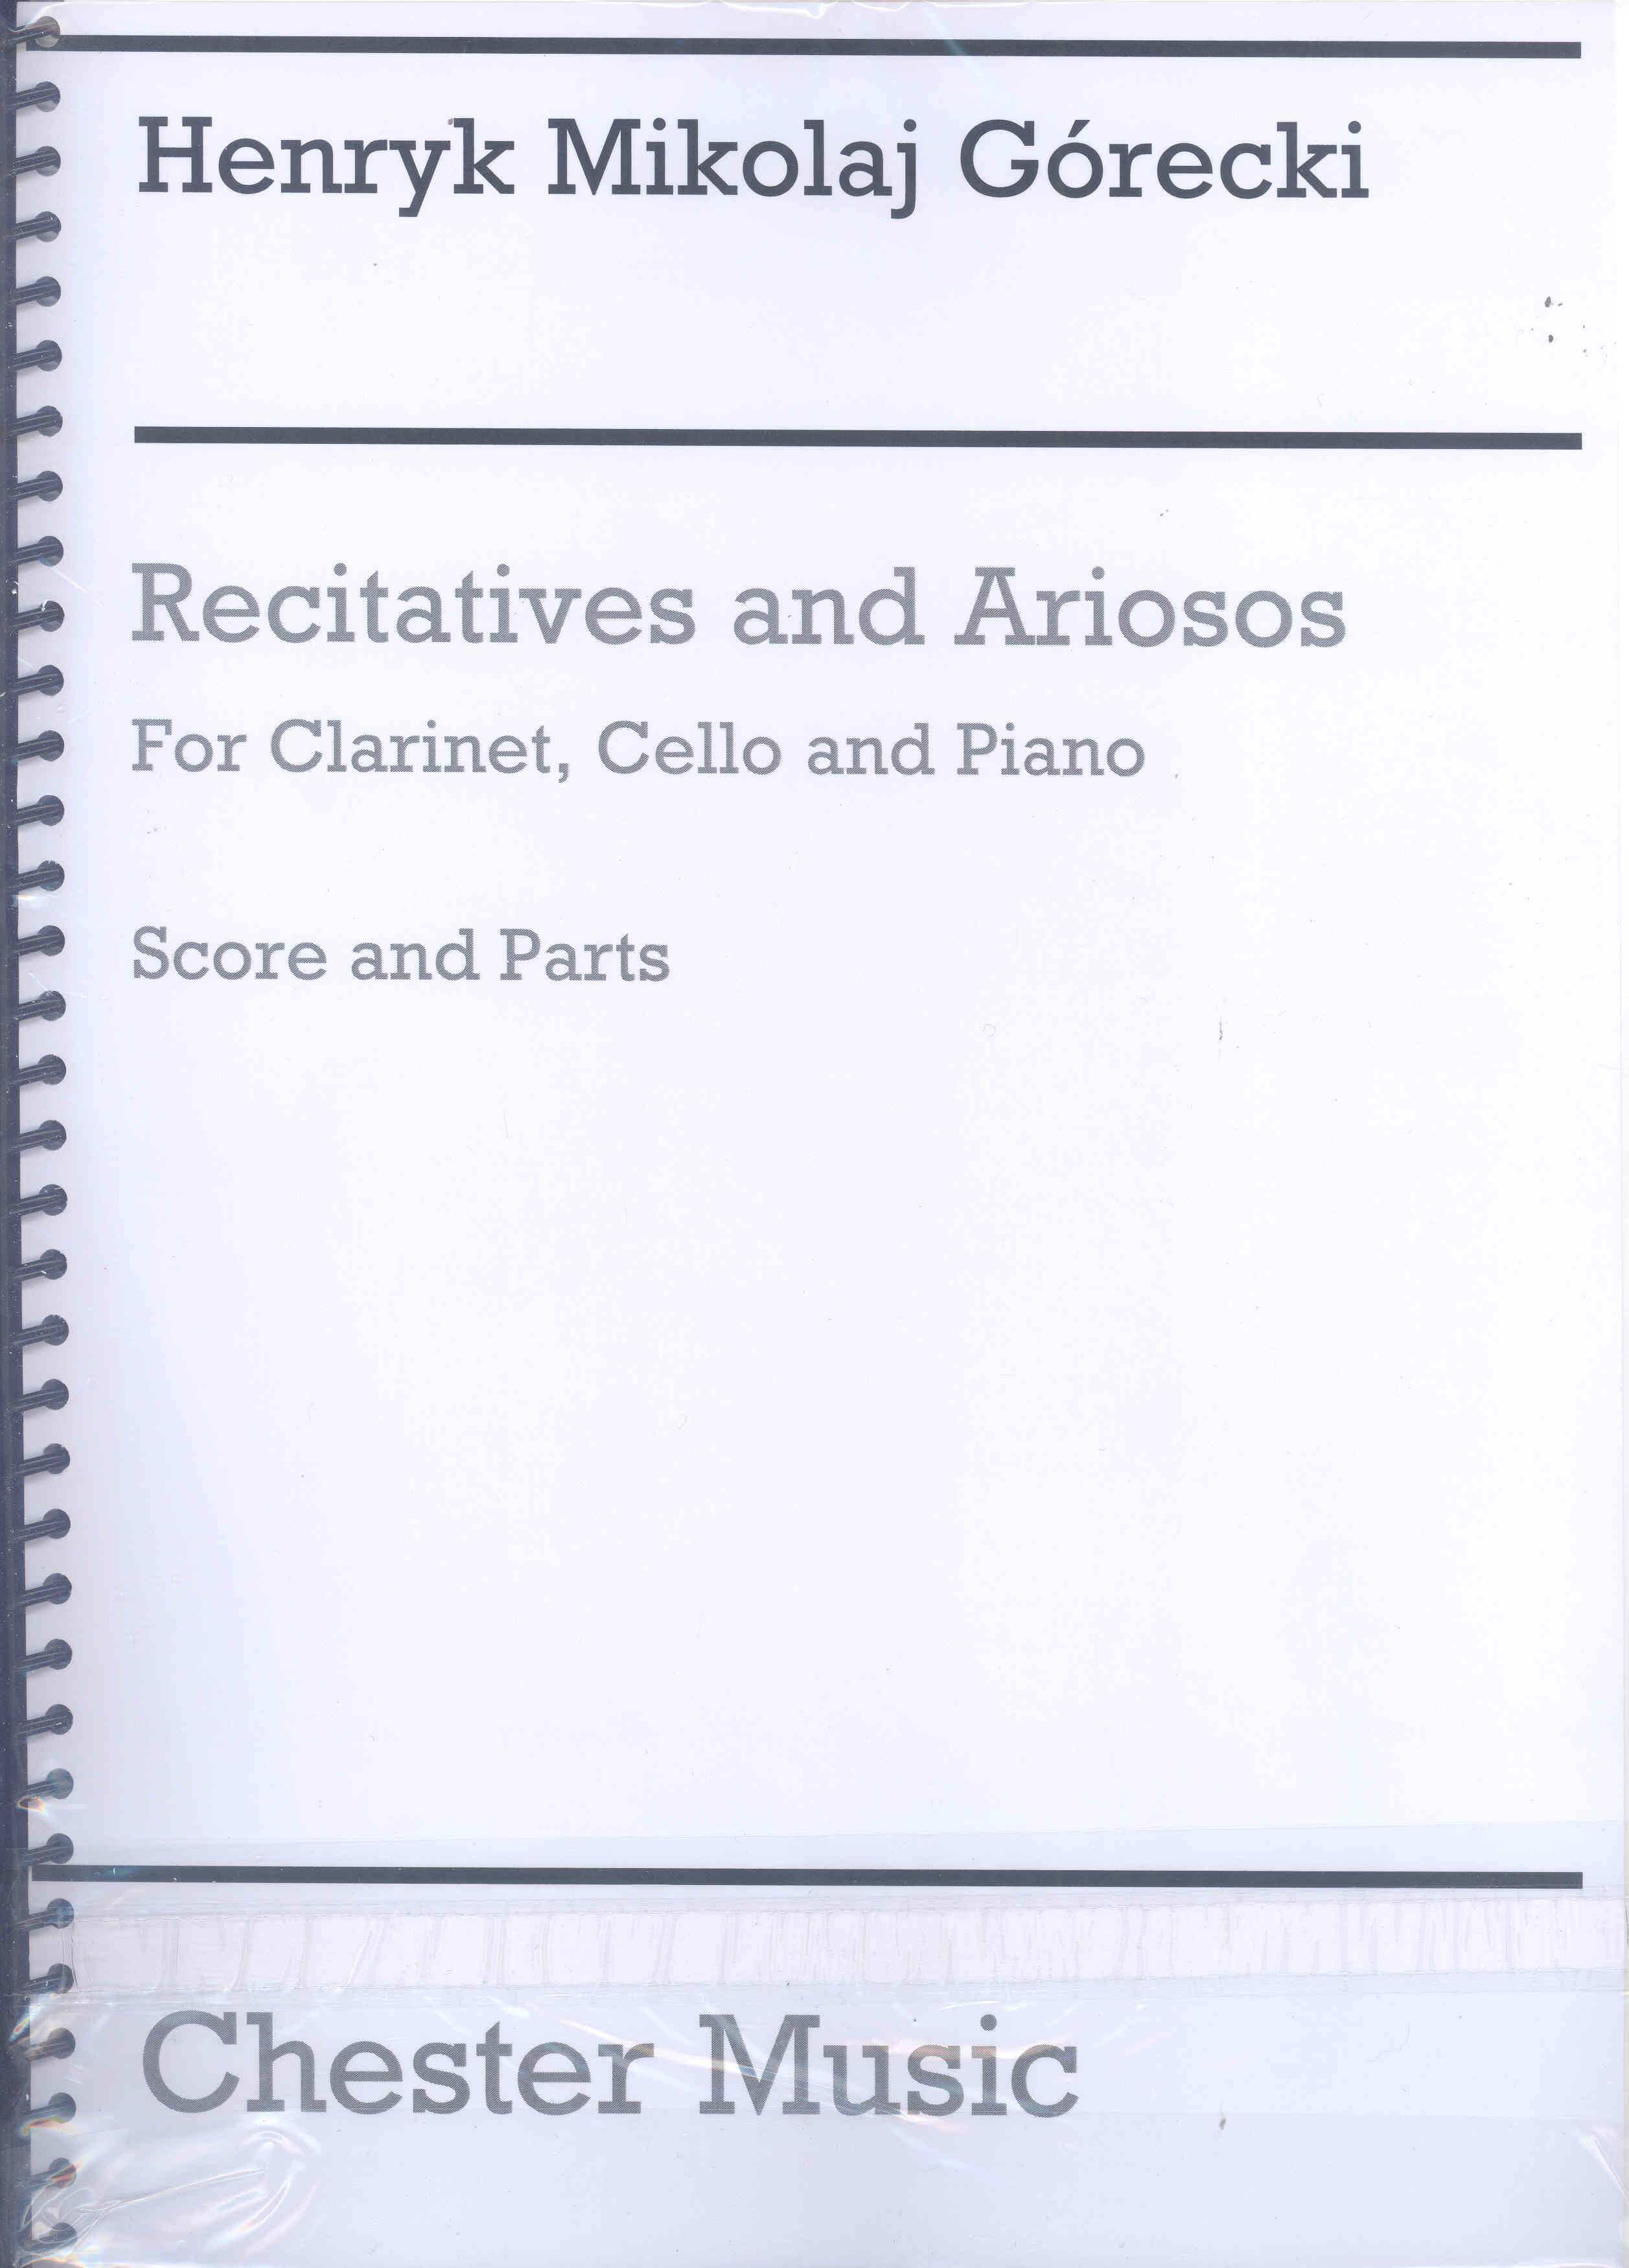 Gorecki Lerchenmusik Trio Recitative Score & Parts Sheet Music Songbook